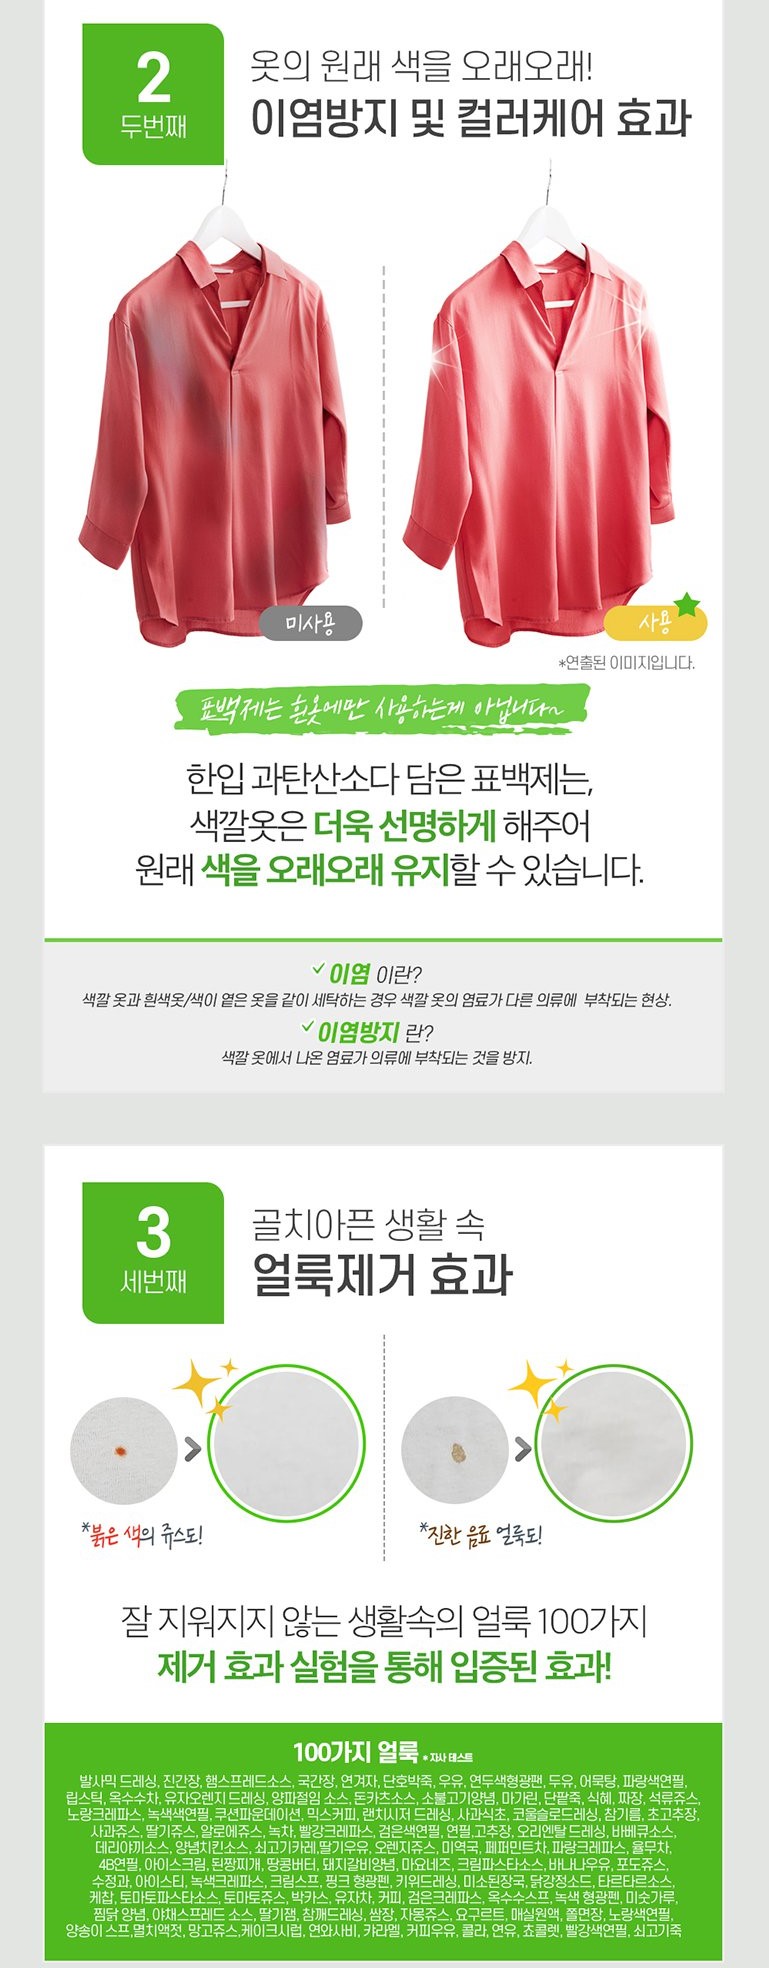 韓國食品-[Lgcare] Sodium Percarbonate (Bleach) 2kg